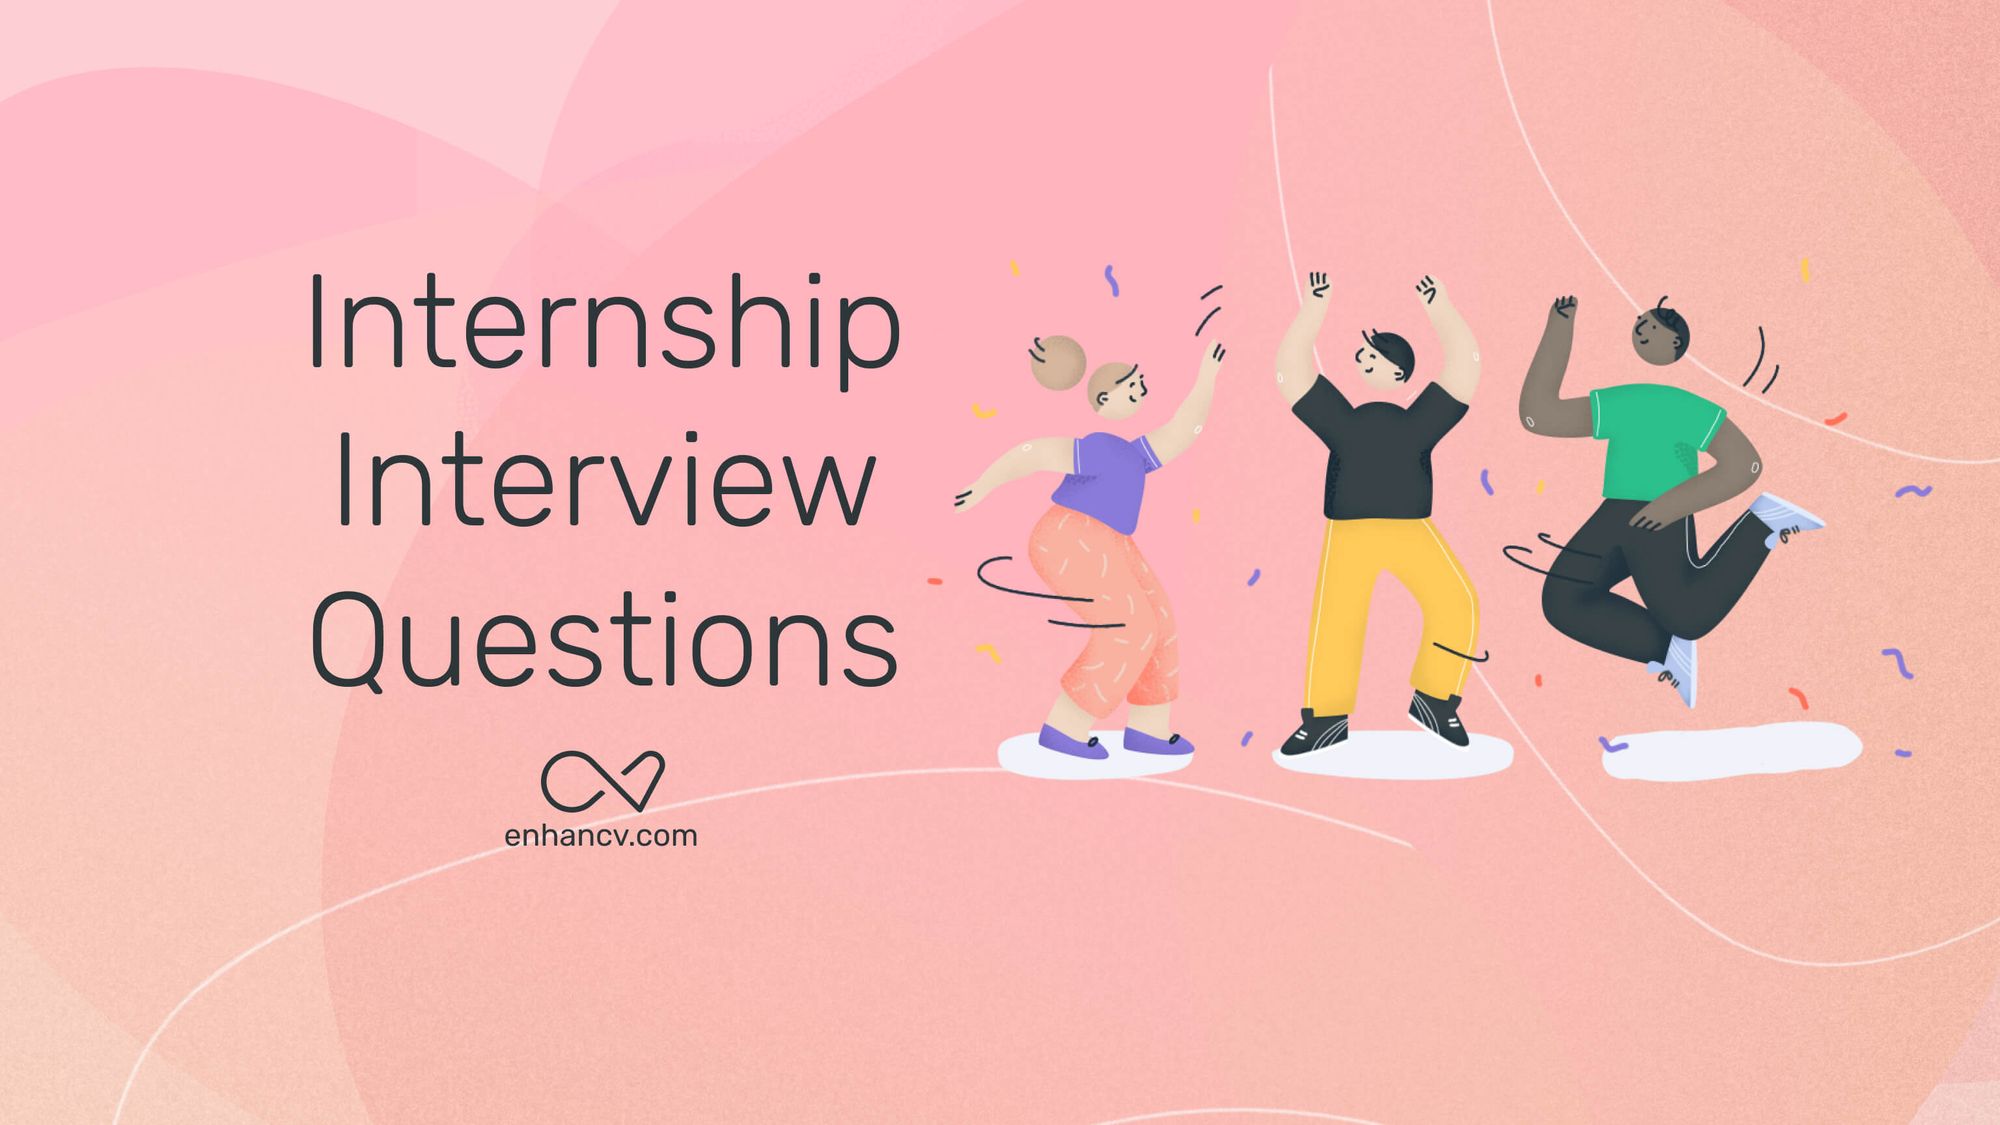 research internship interview questions